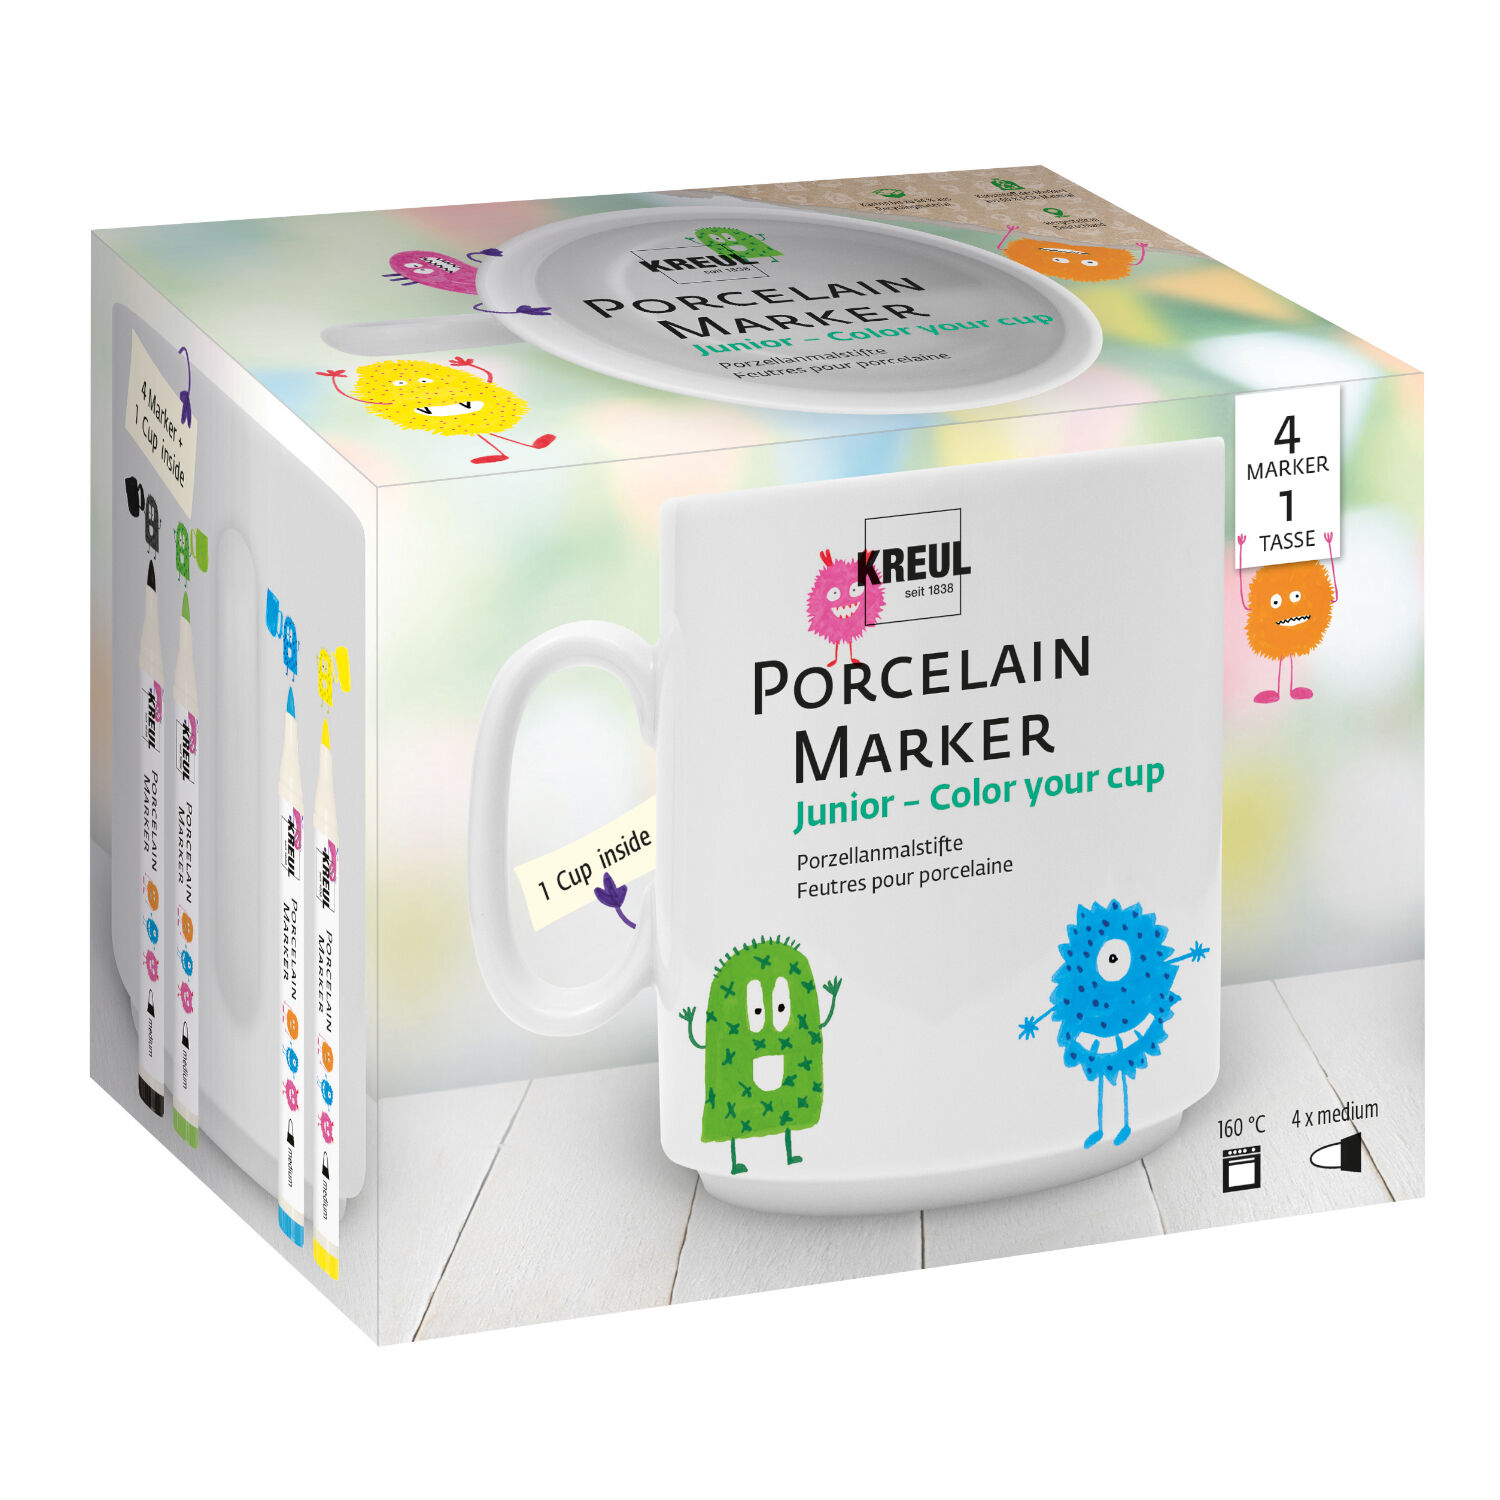 NEU KREUL Porzellan Marker / Porzellanmalstift medium Junior Set Color your cup